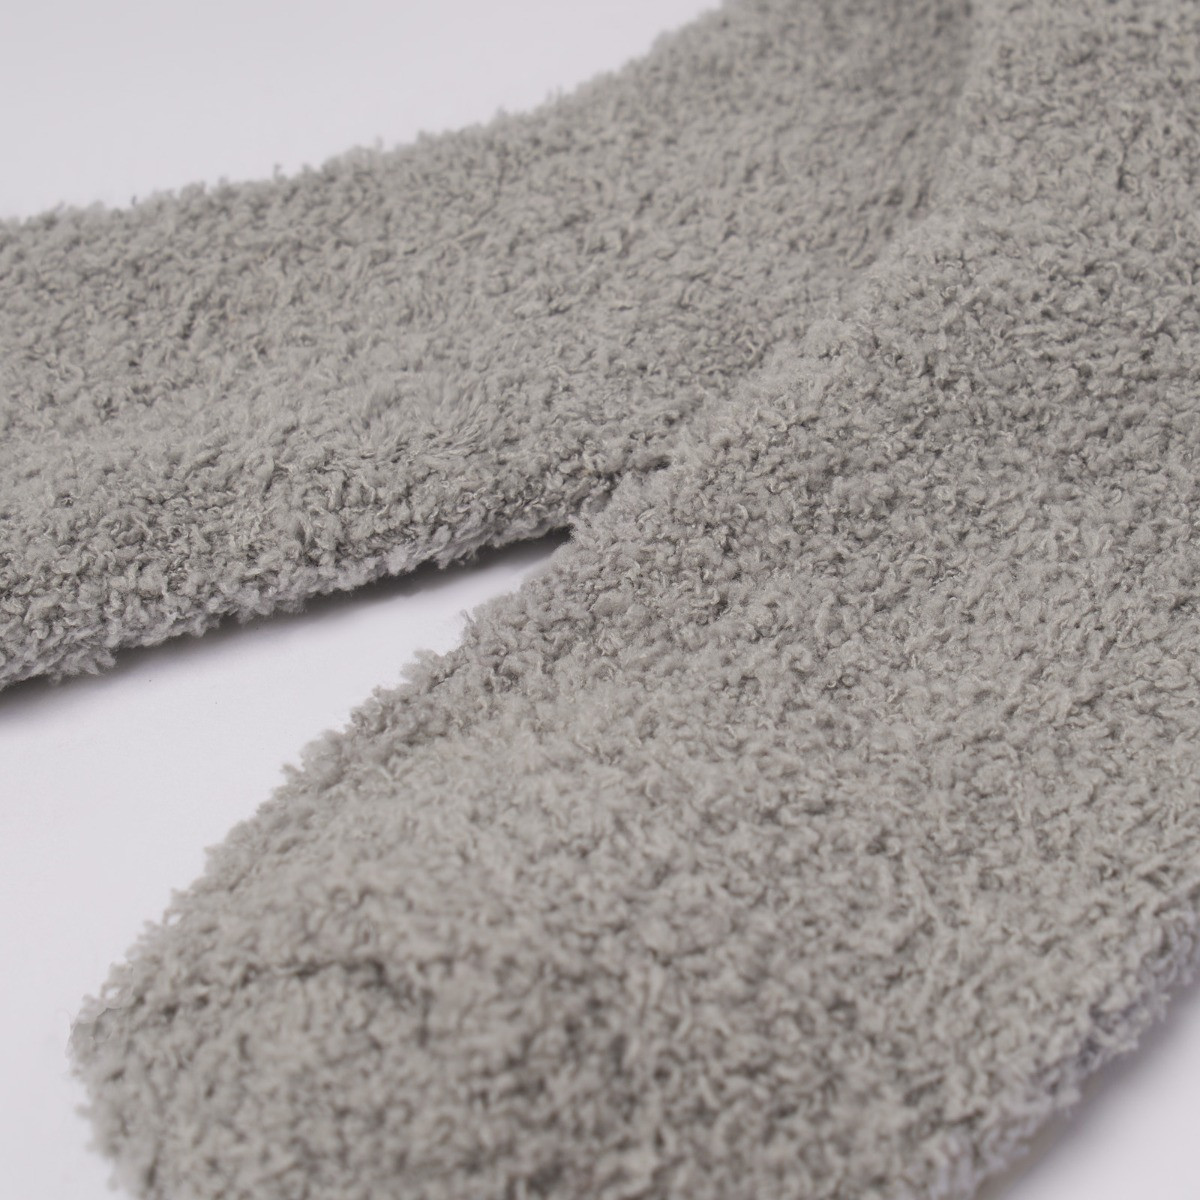 OHS Fluffy Fleece Socks - Charcoal>